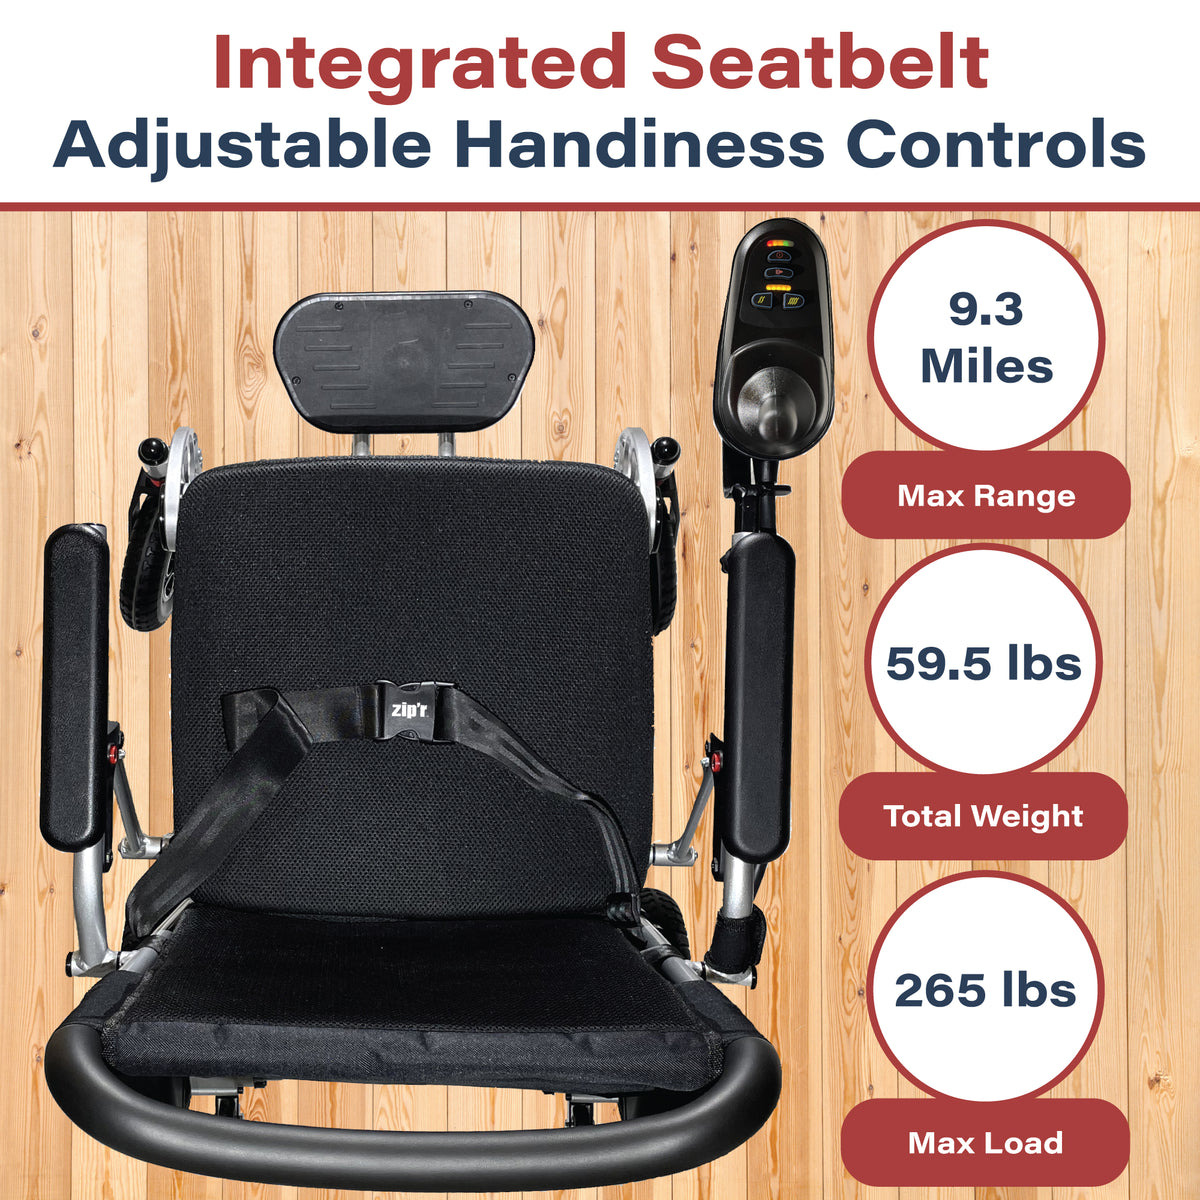 Transport Pro Folding Electric Wheelchair | Zip'r Mobility - Zipr 